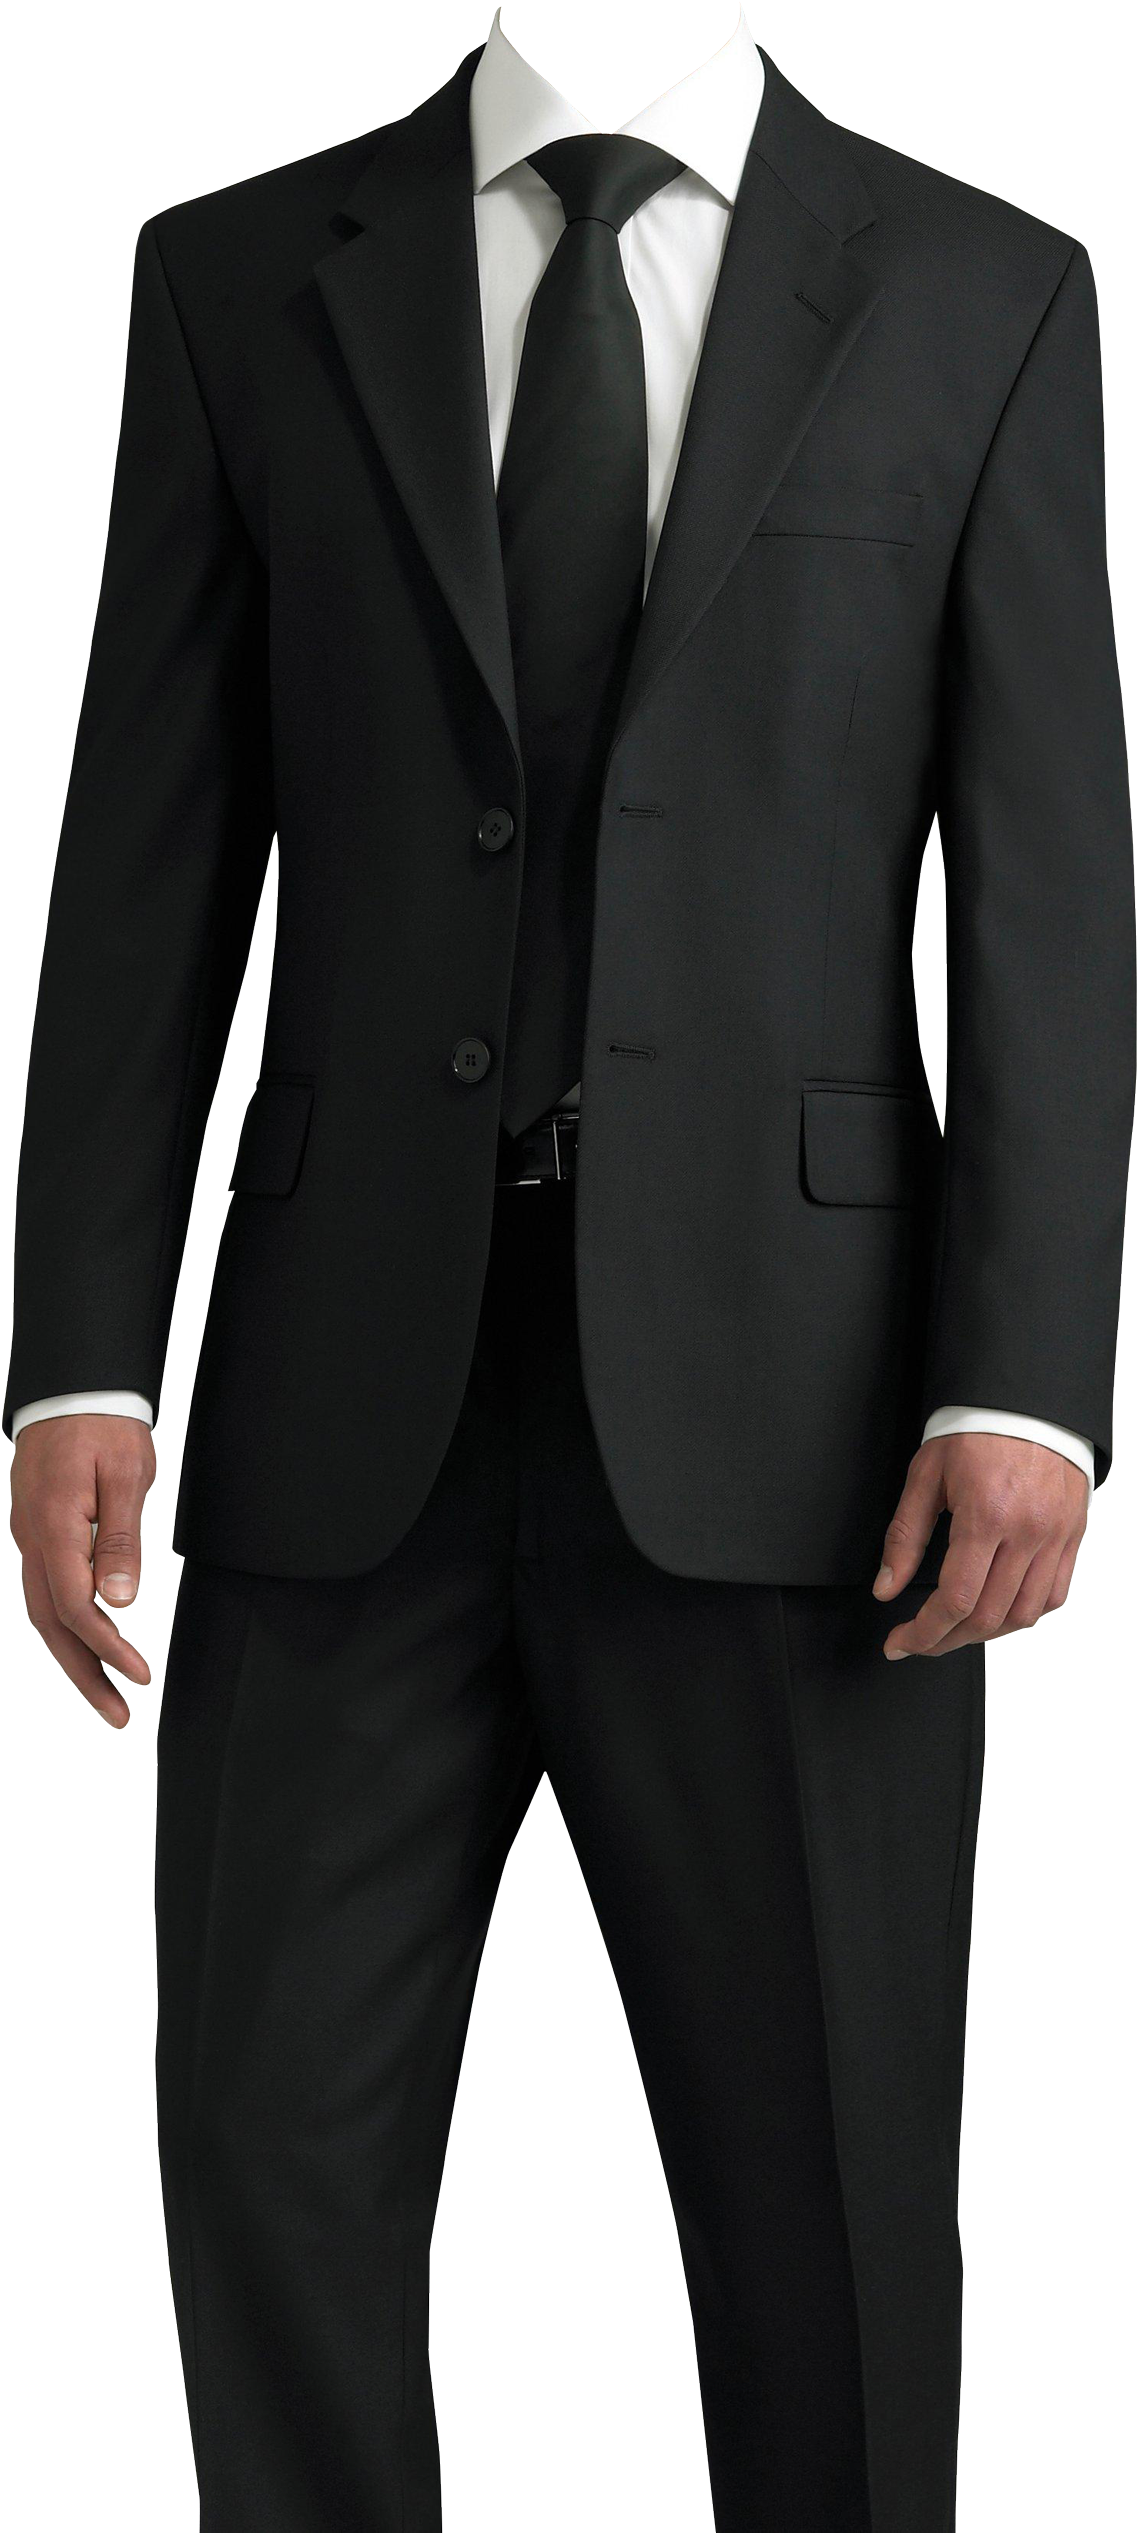 Suit Png Transparent Image - Man In A Suit Png Clipart (1800x2702), Png Download